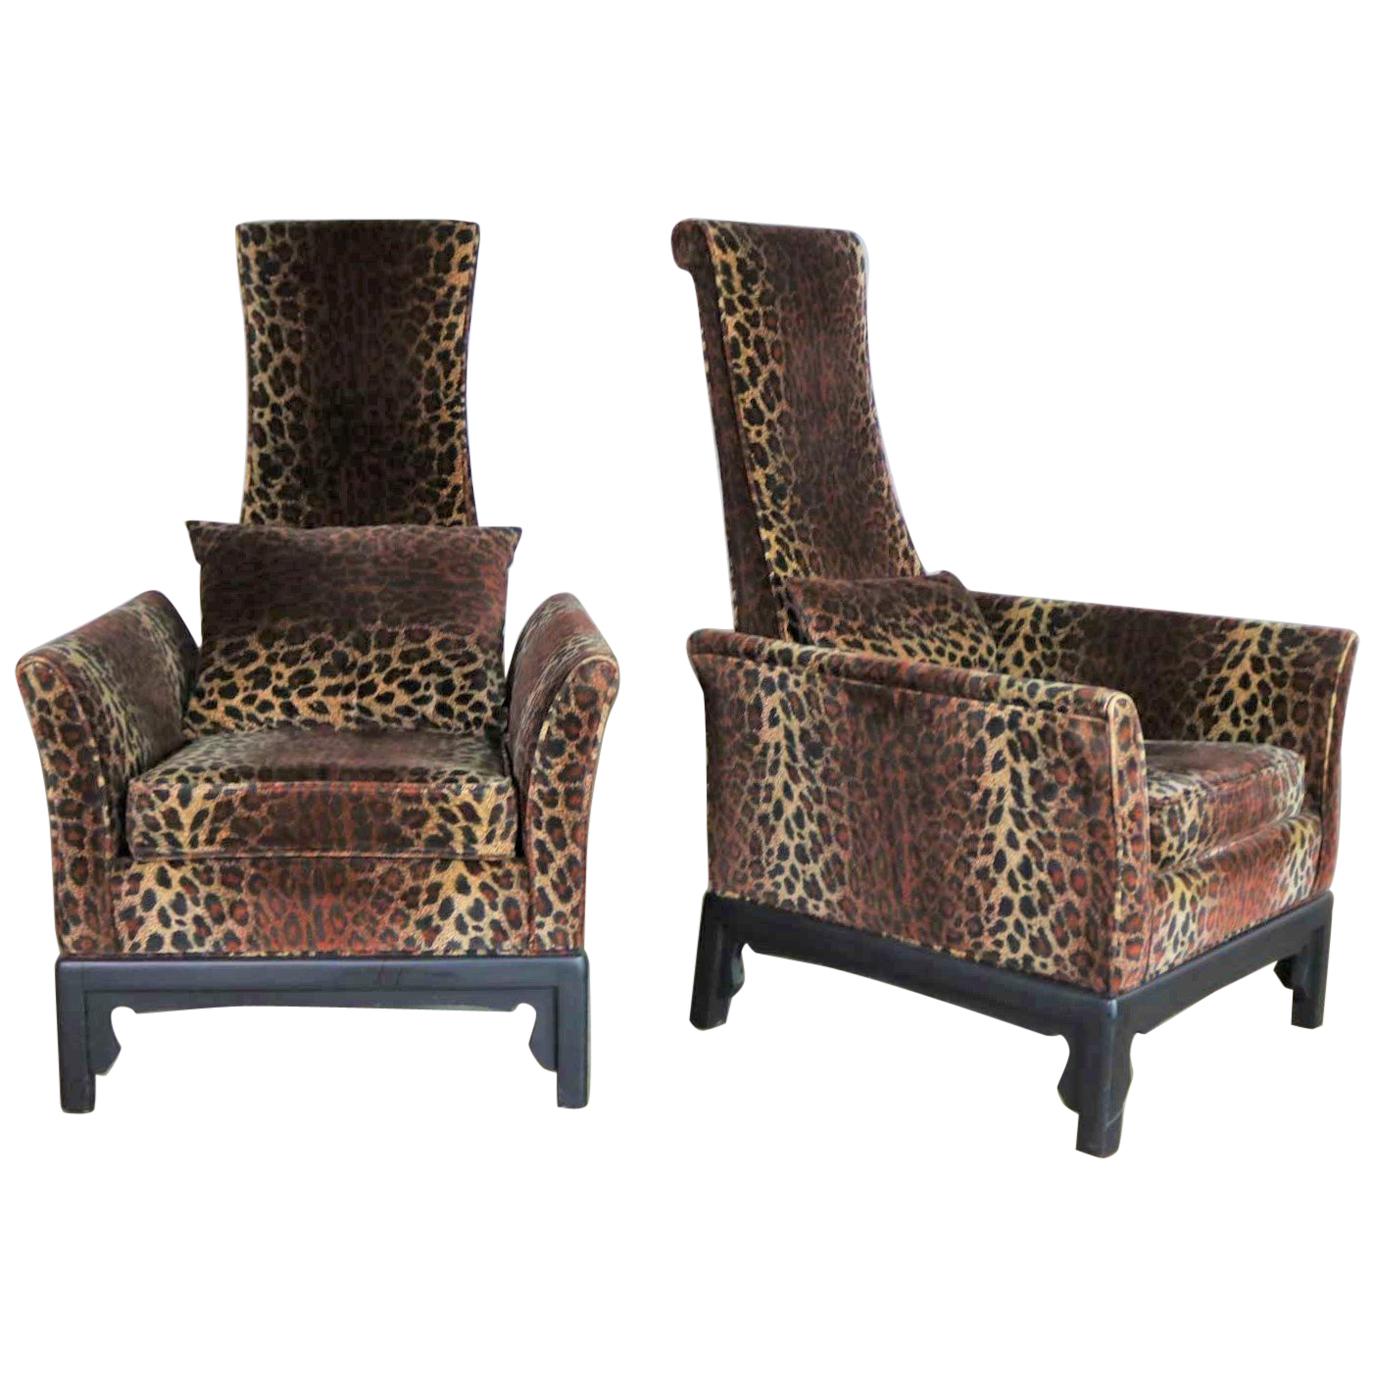 Hollywood Regency High Back Chairs Velvet Animal Print Style of James Mont, Pair